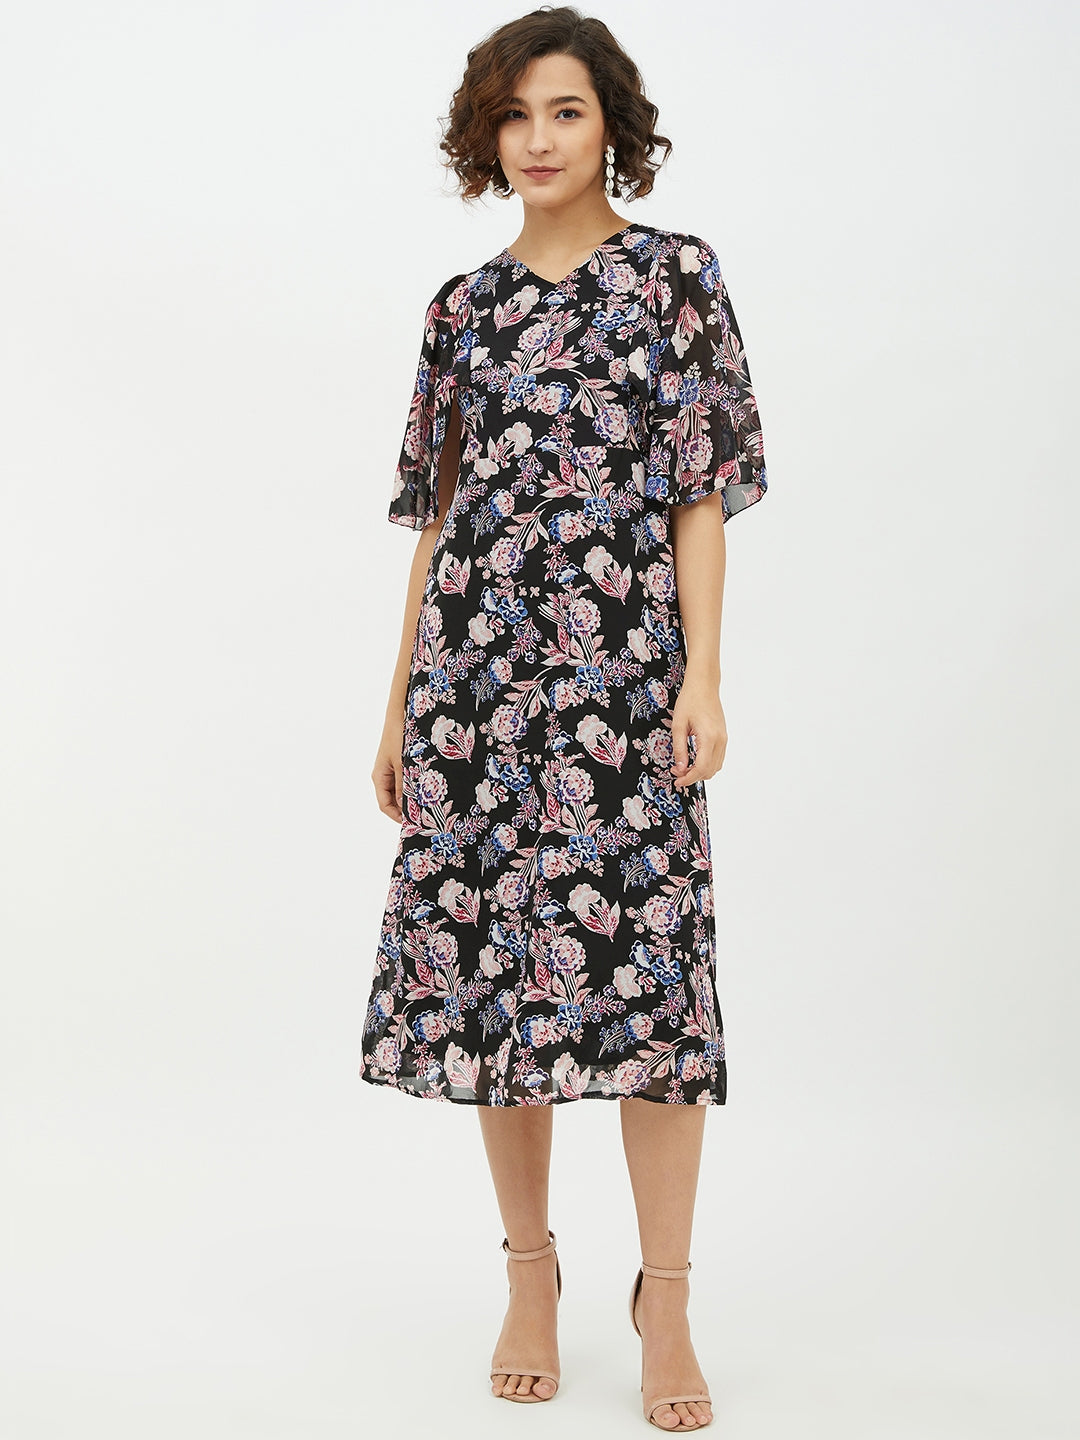 Multi-Color-Poly-Georgette-Floral-Print-Cape-Style-Dress